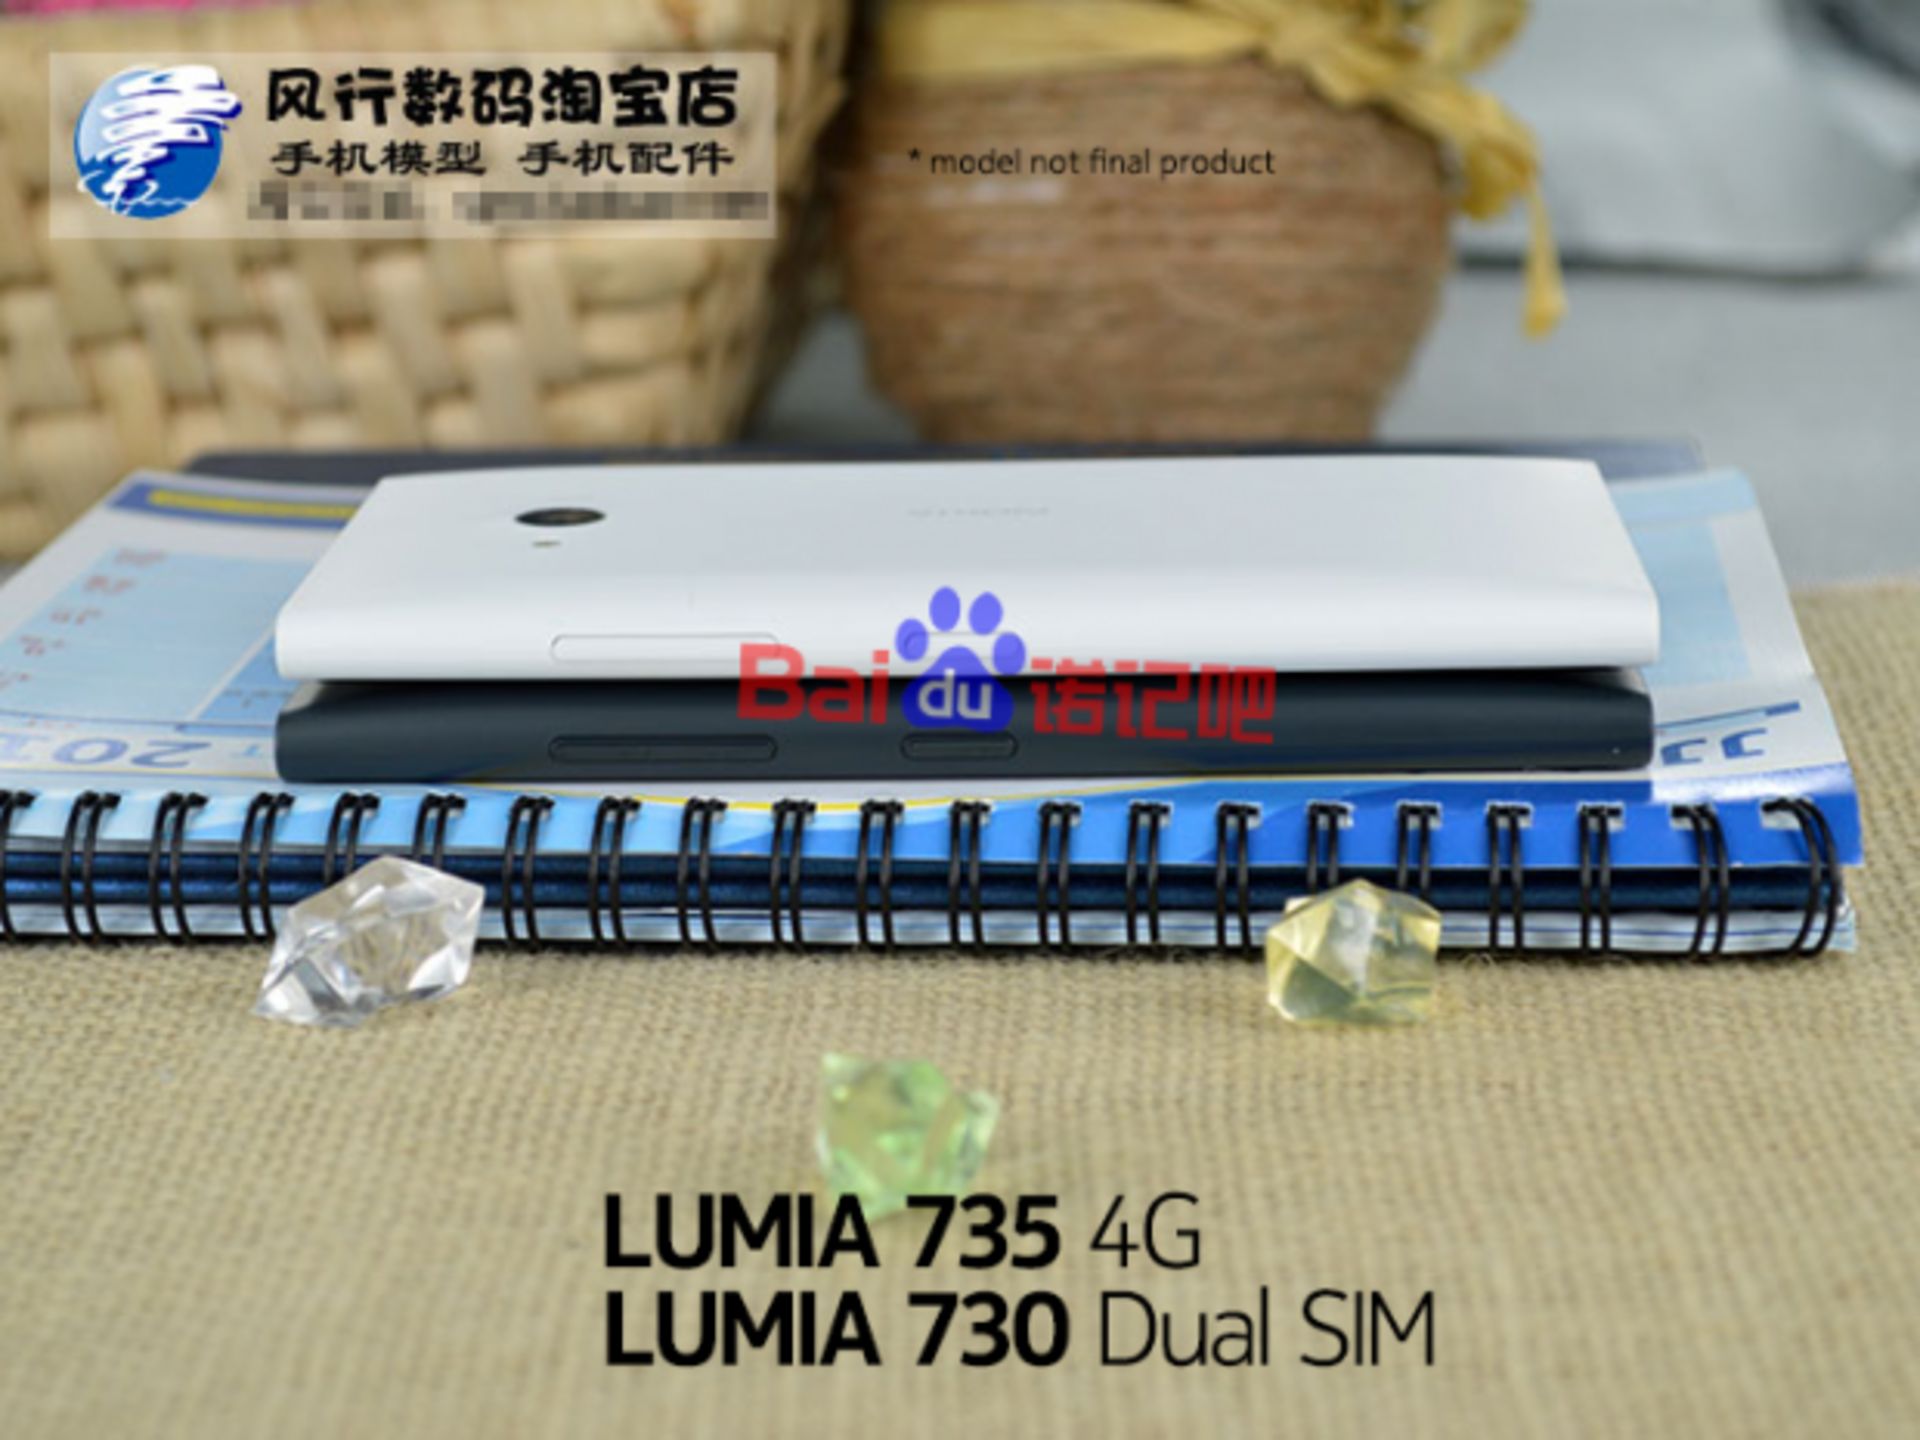 Nokia-Lumia-735-4G-Lumia-730-Dual-Sim-3-620x465